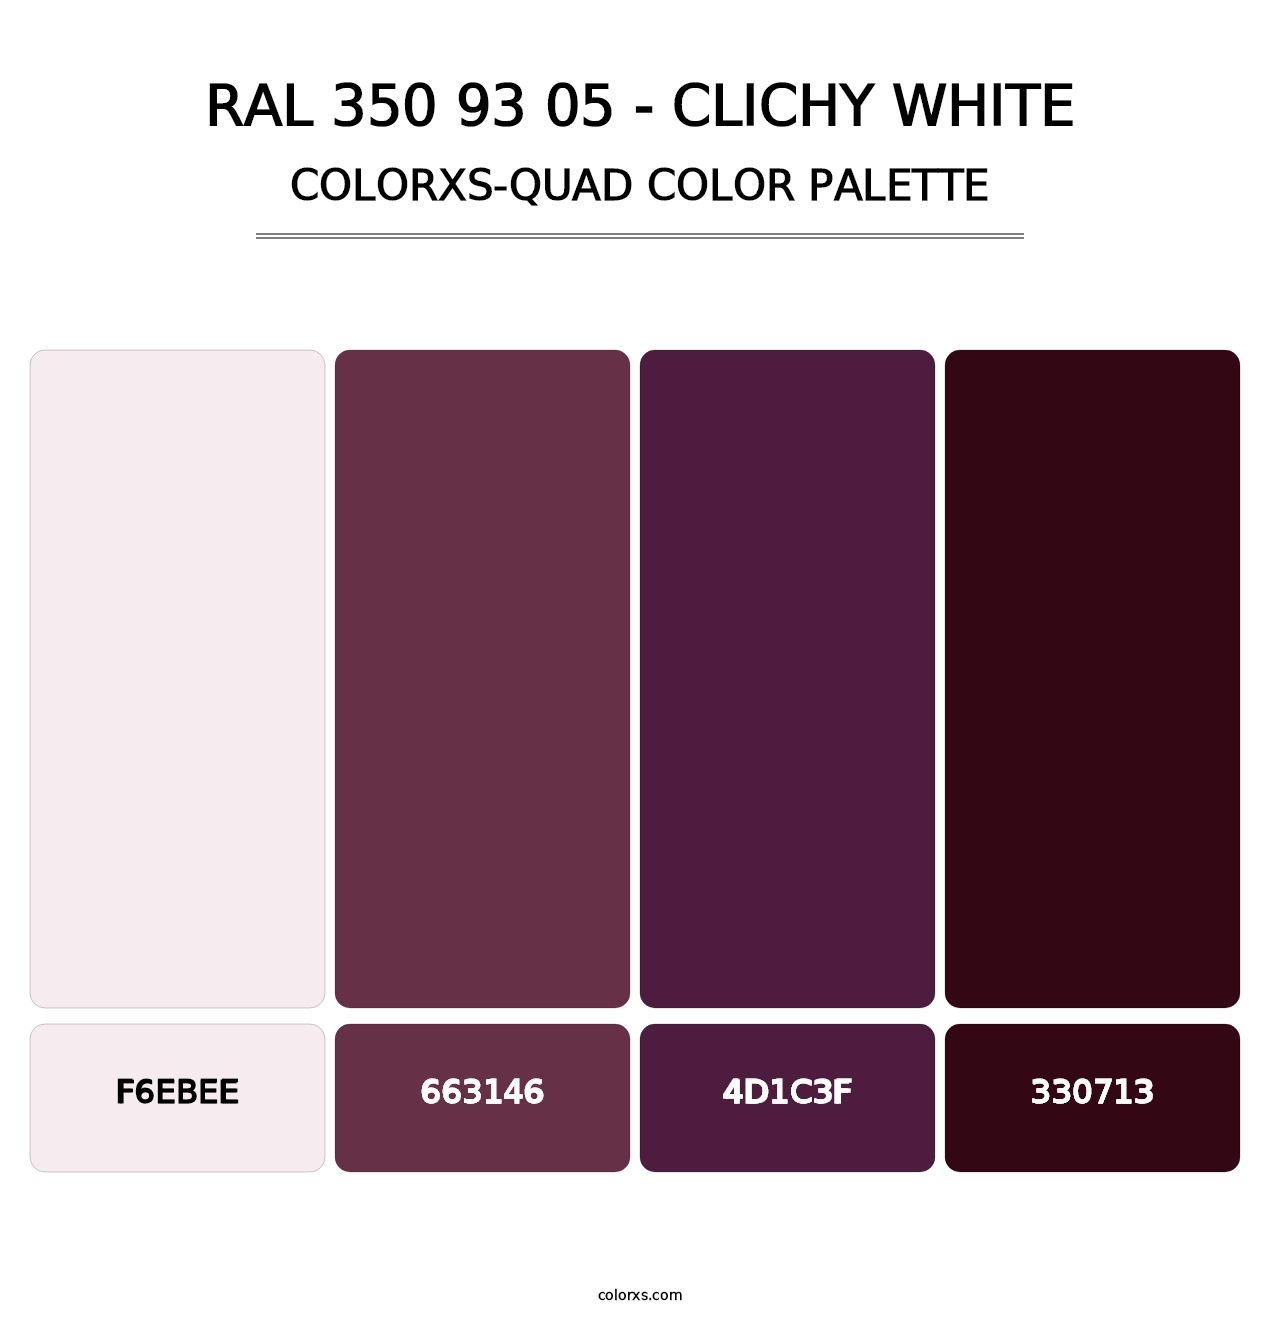 RAL 350 93 05 - Clichy White - Colorxs Quad Palette